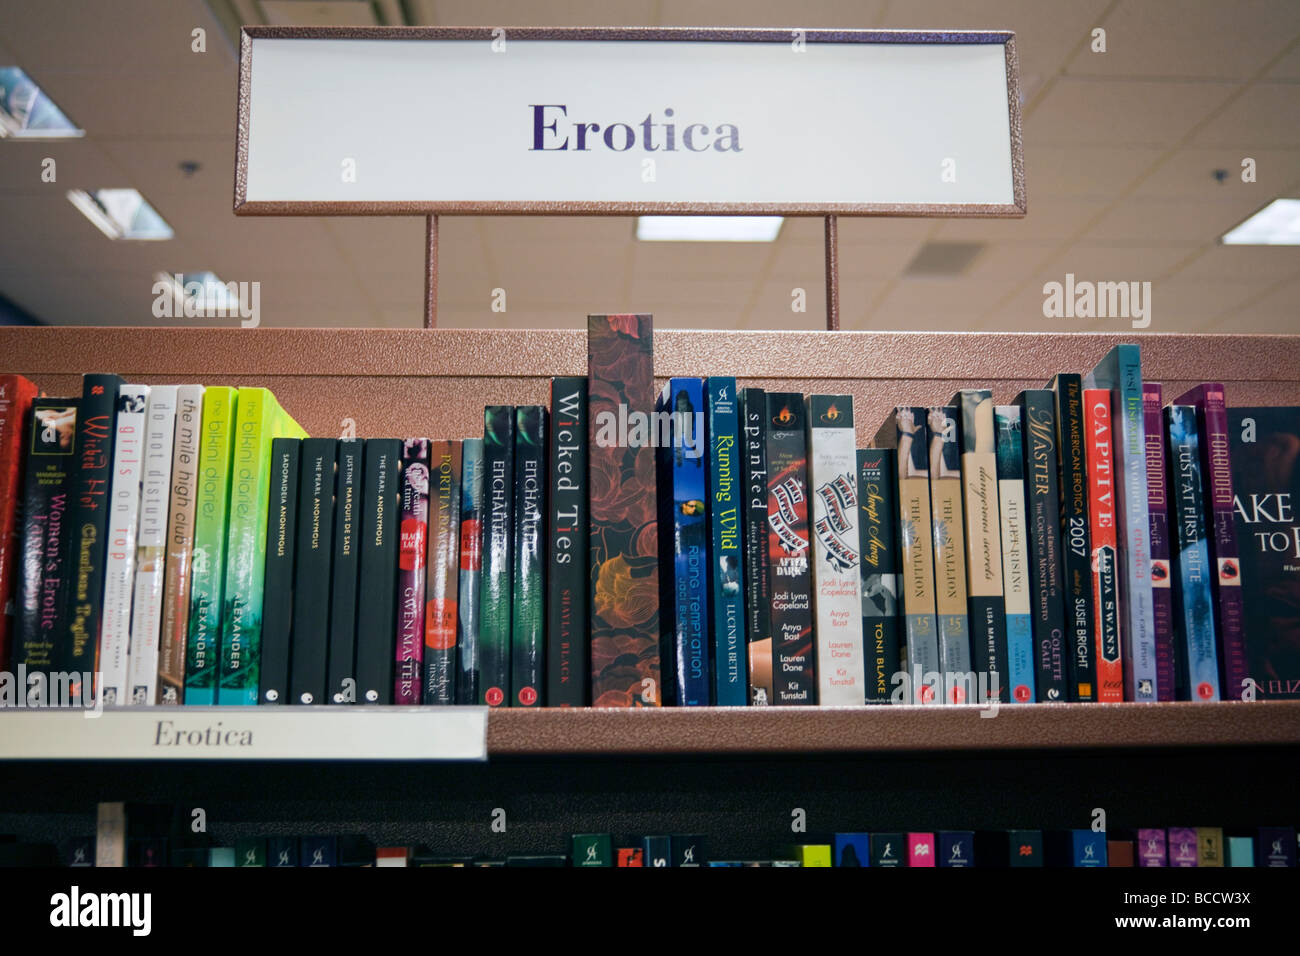 Educatinal erotic books